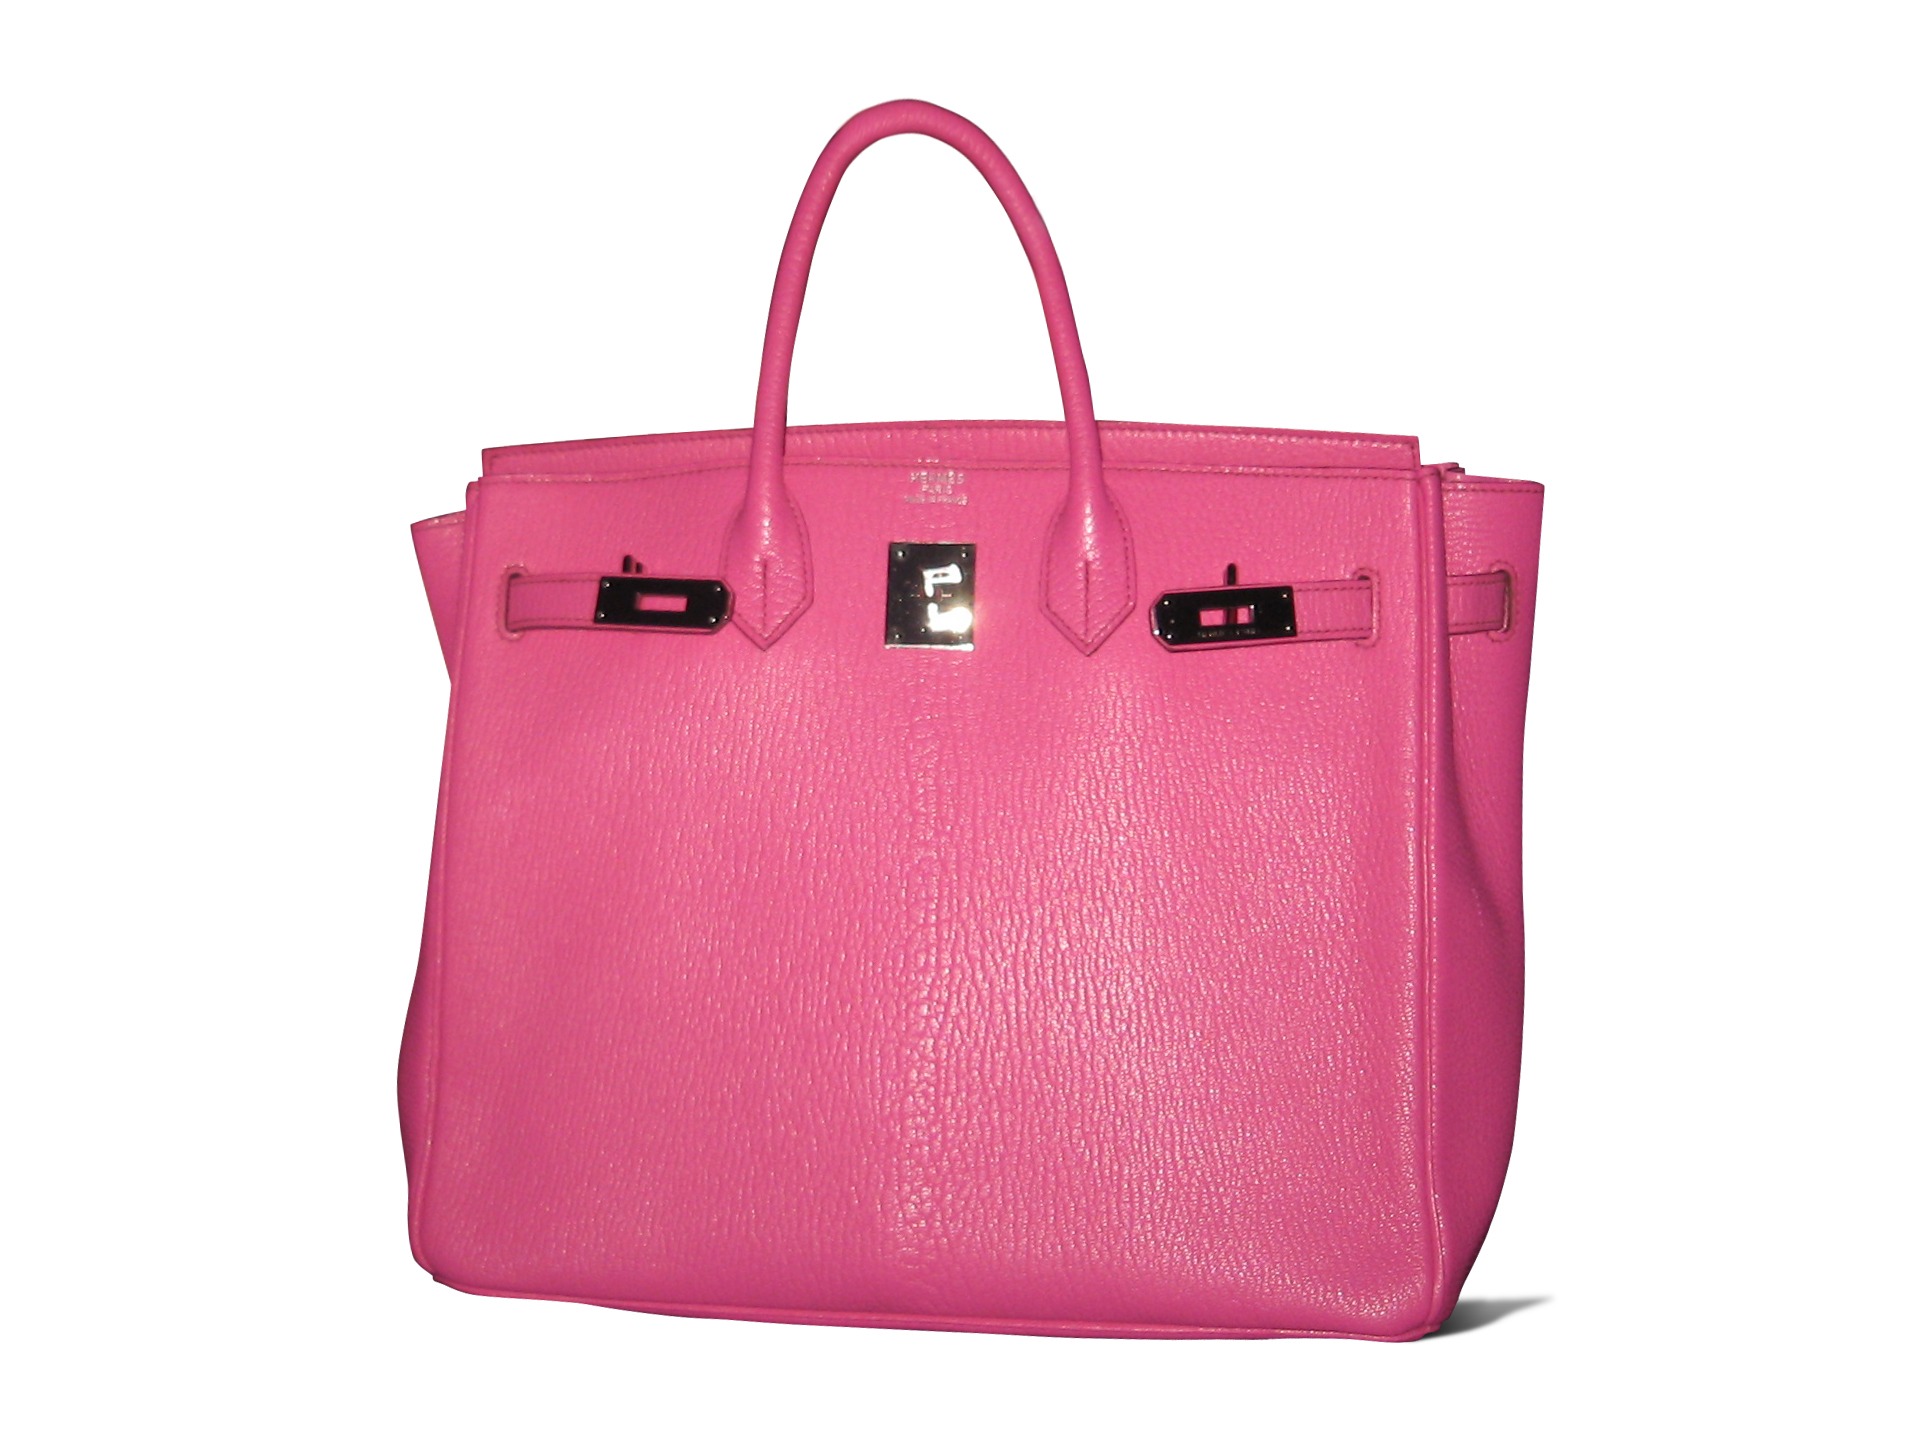 A pink Birkin bag